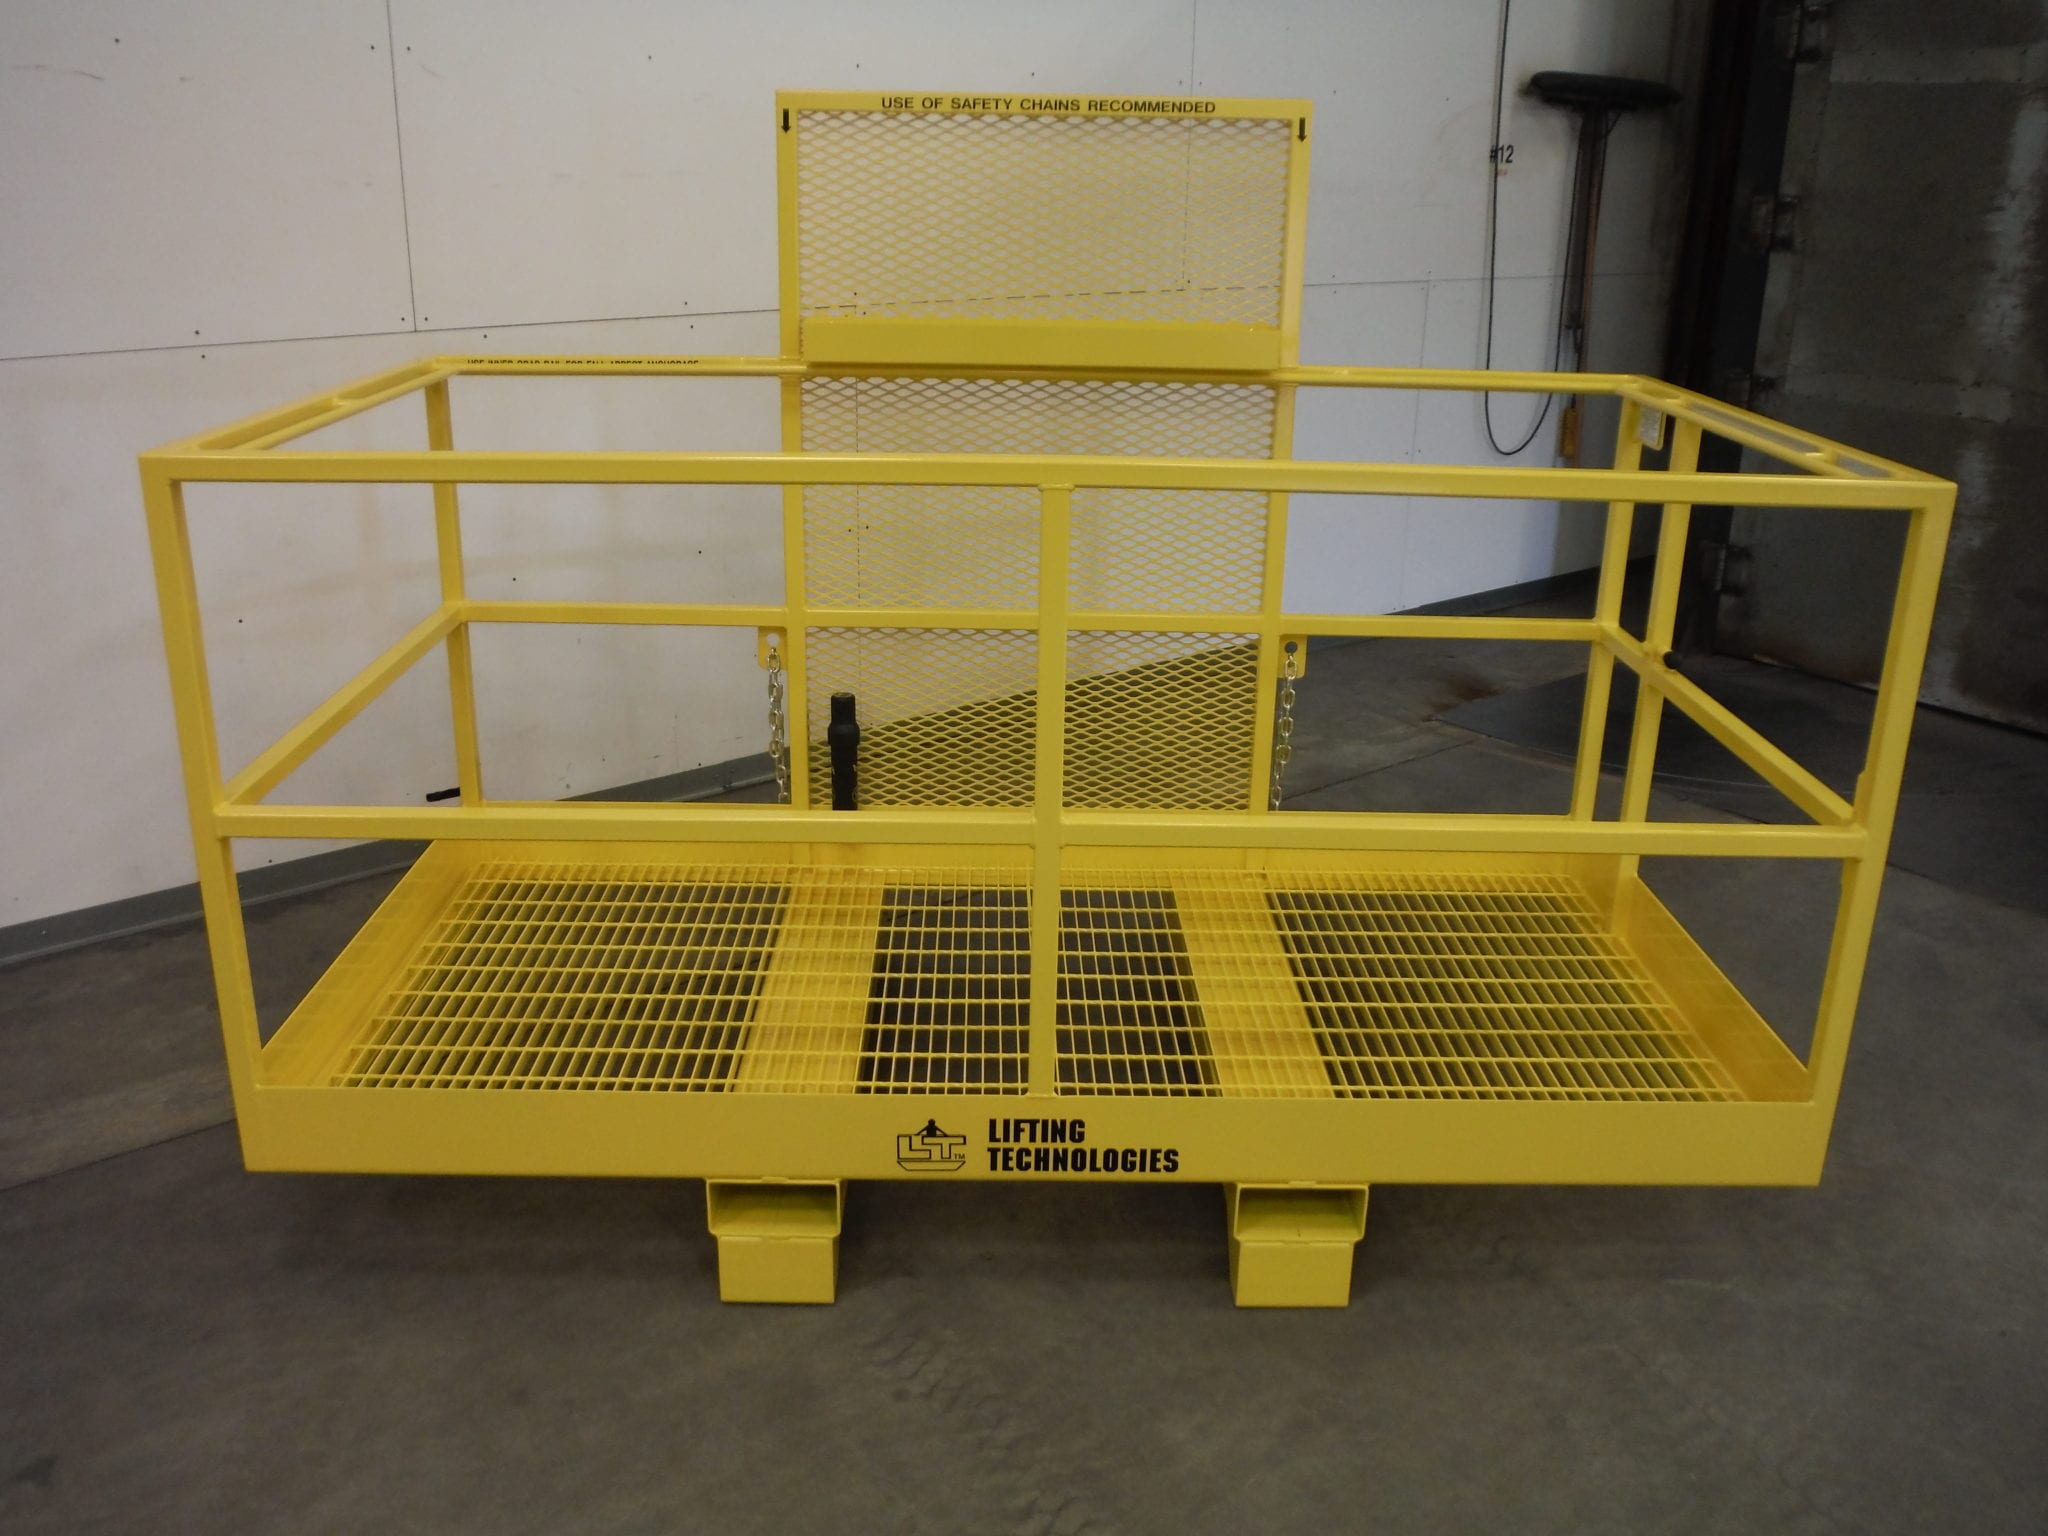 Forklift Work Platform Lifting Technologies